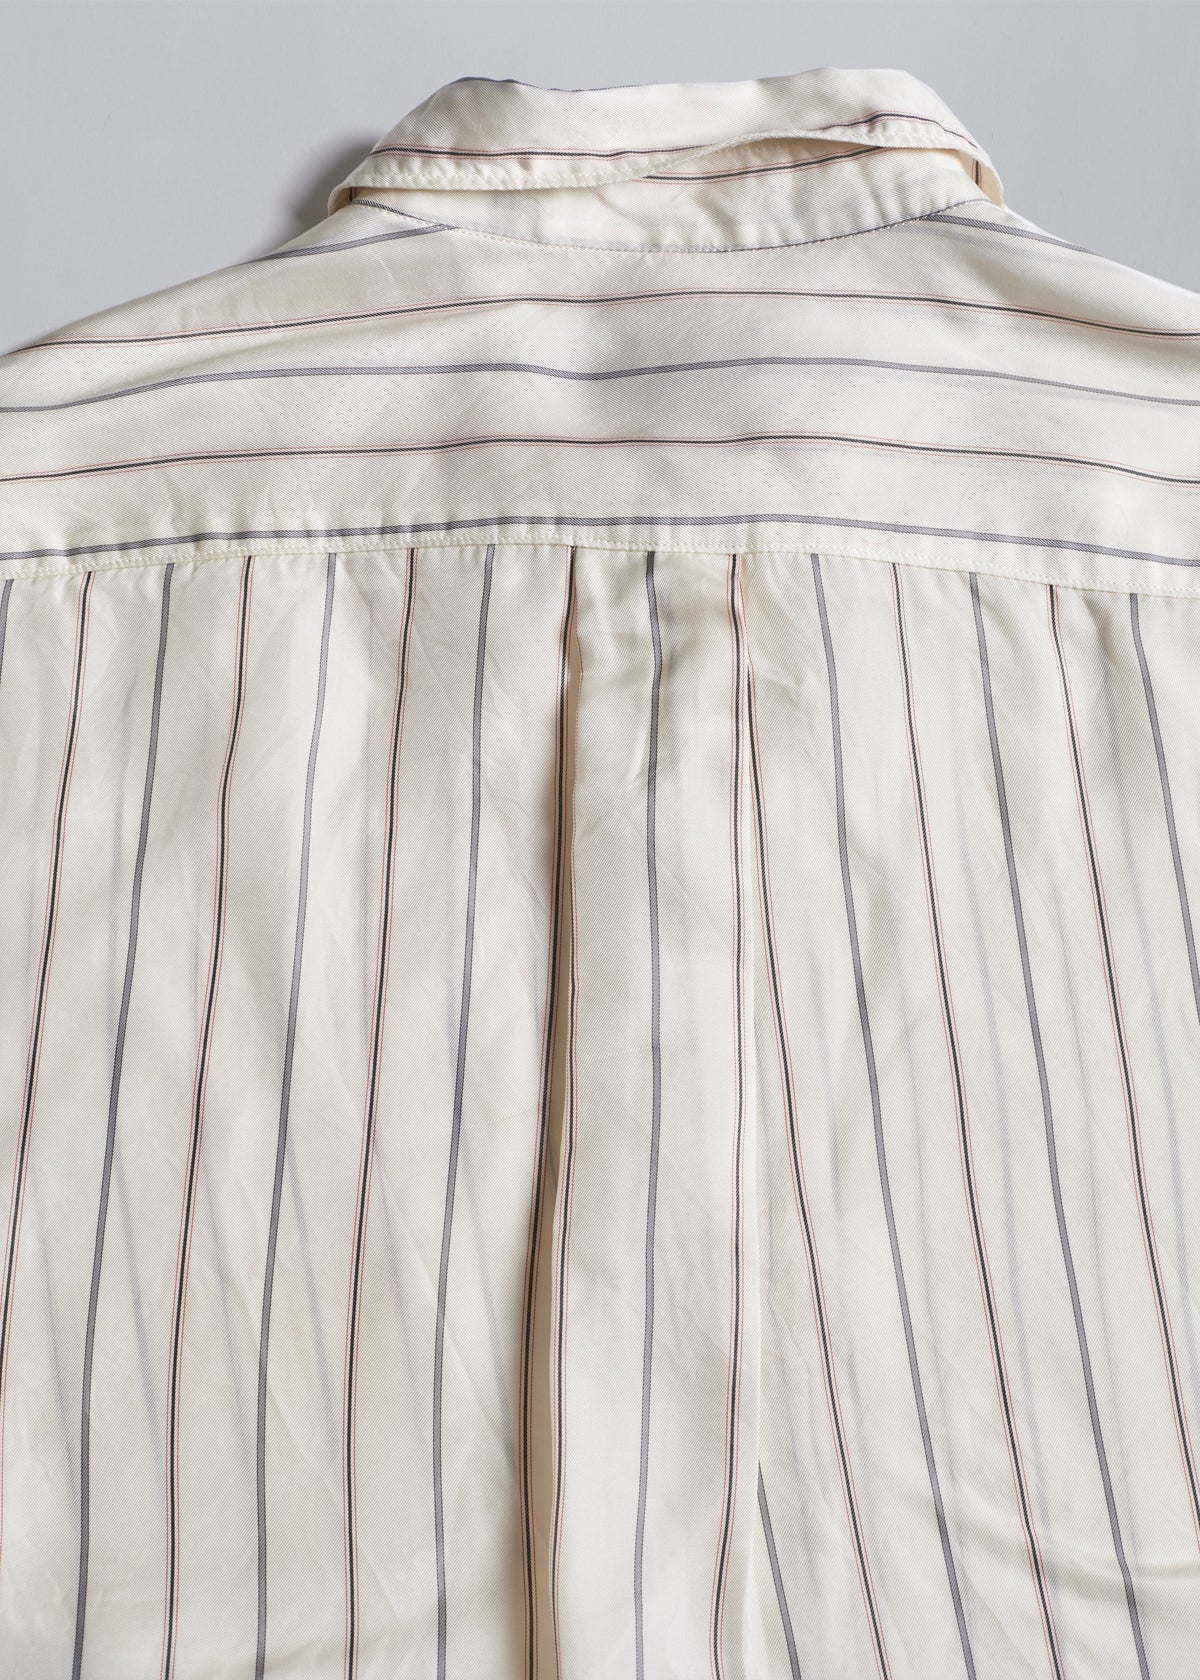 CDGH Cupro Striped Shirt 2003 - Medium - The Archivist Store